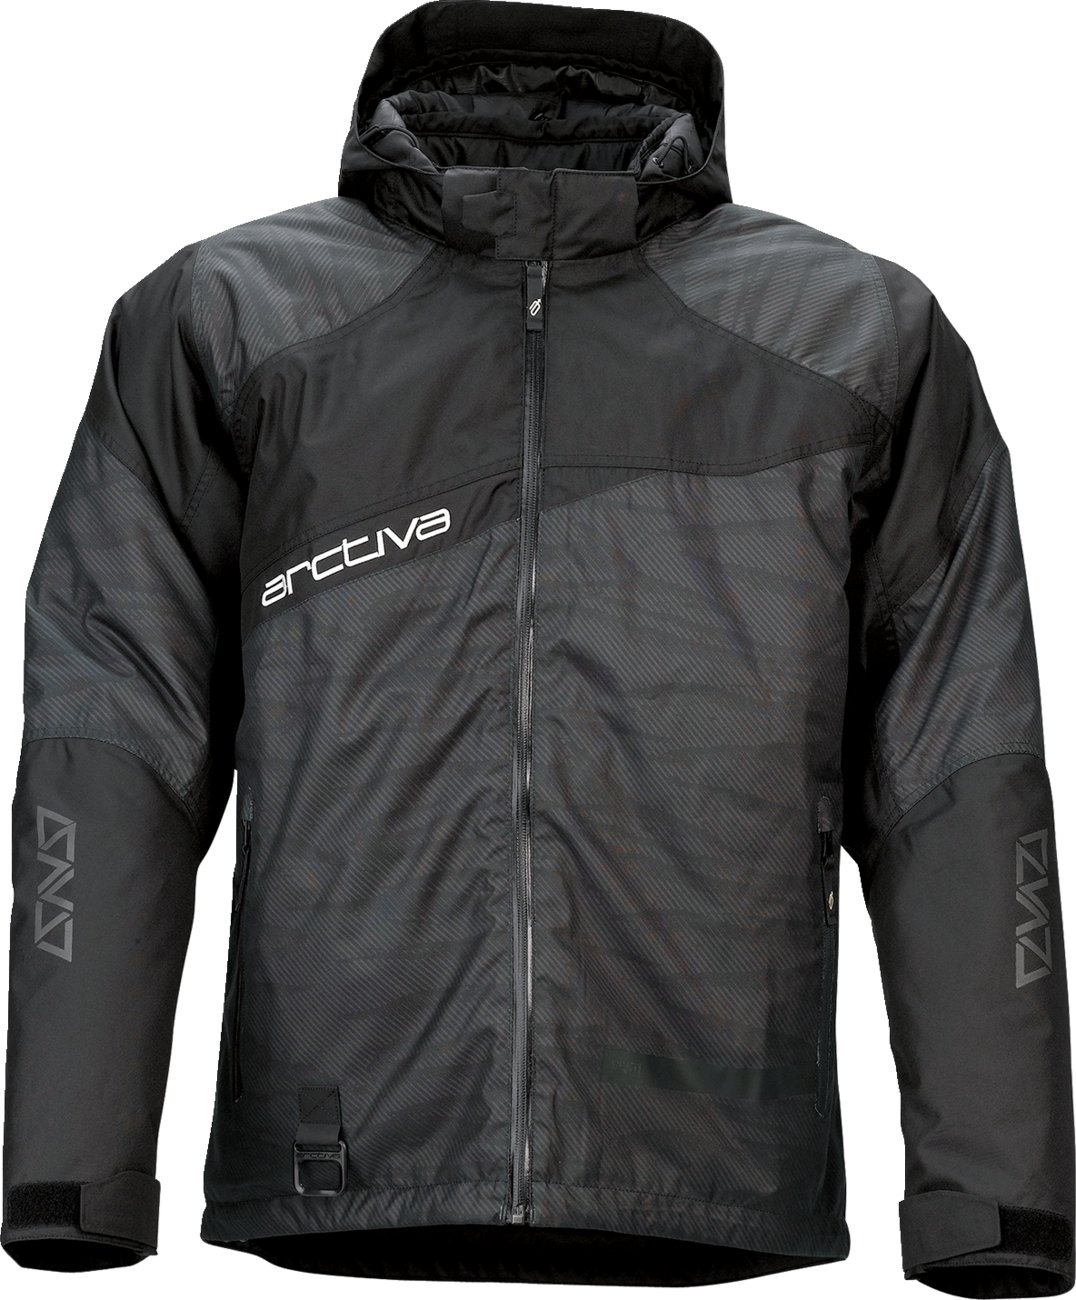 ARCTIVA Pivot 5 Hooded Jacket - Black - Medium 3120-2075